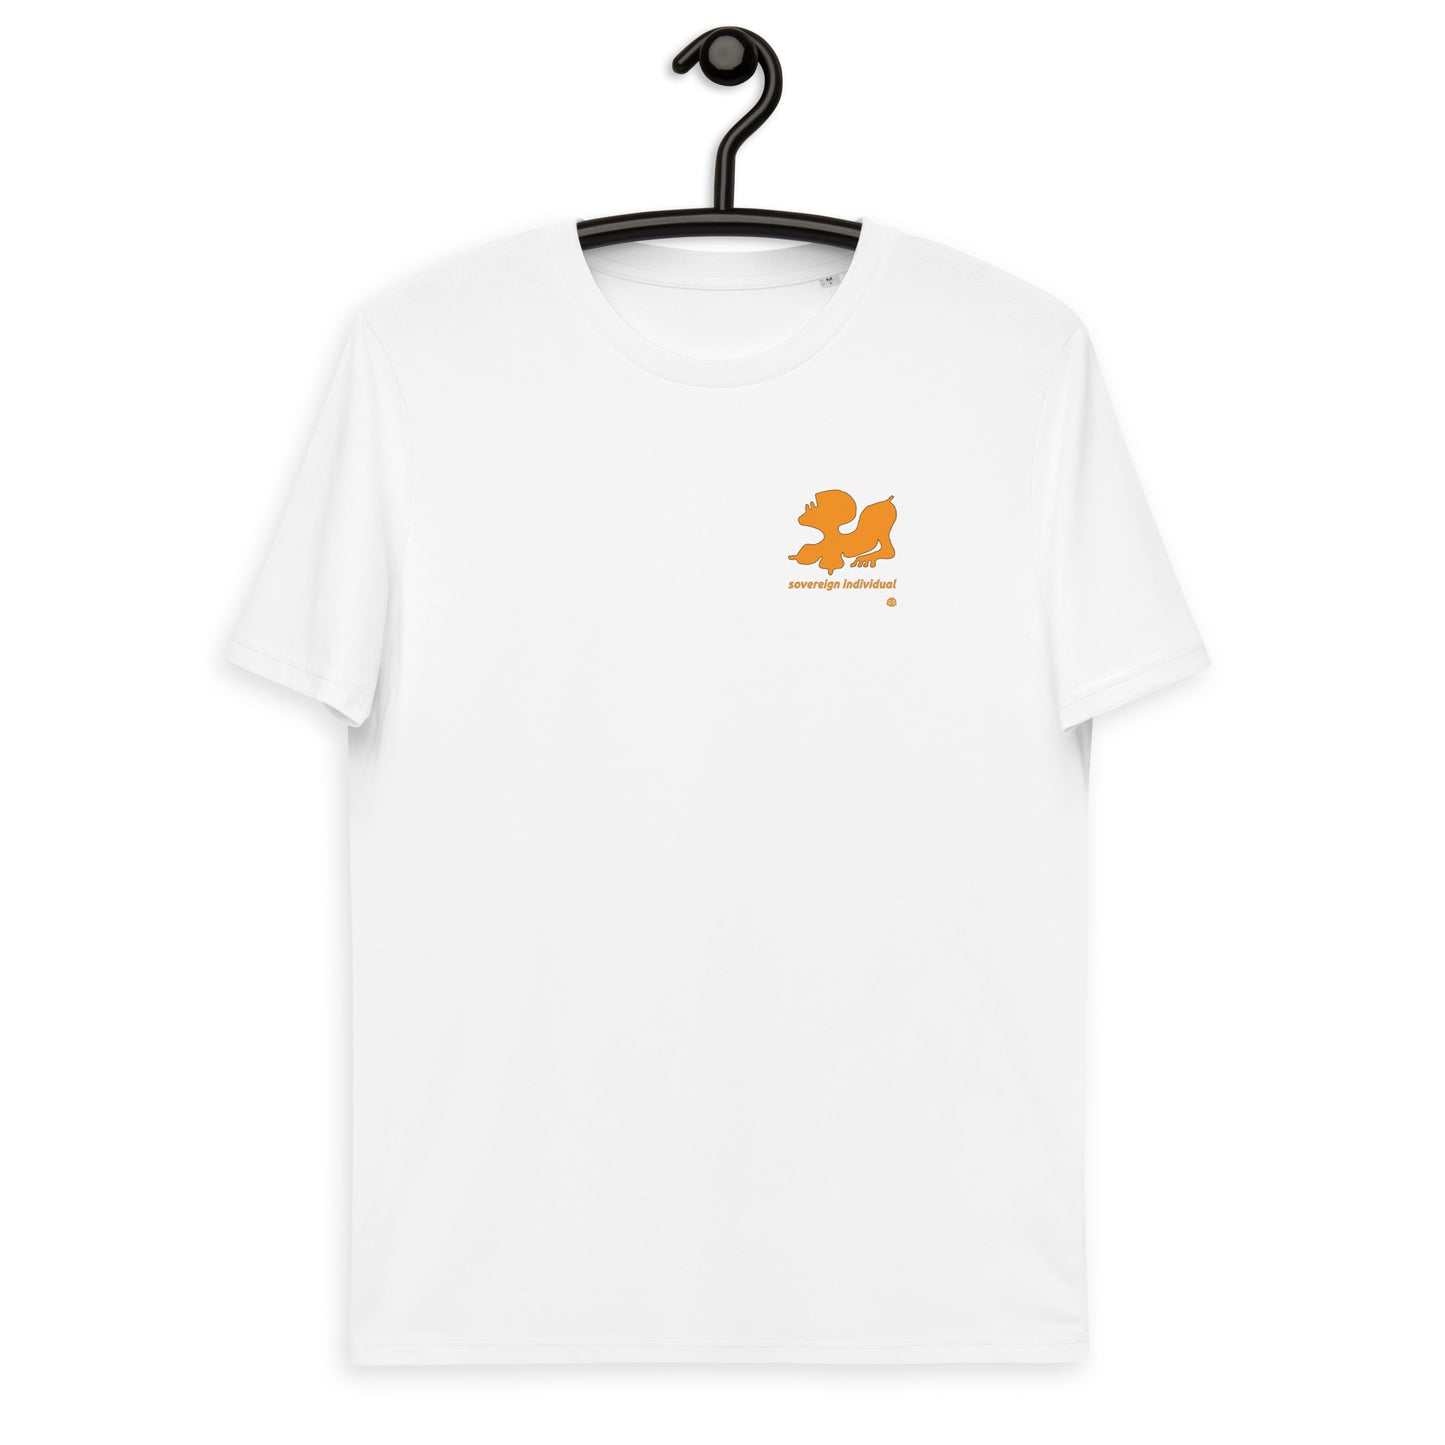 Camiseta unisex de algodón orgánico "SovereignIndividual_sm"